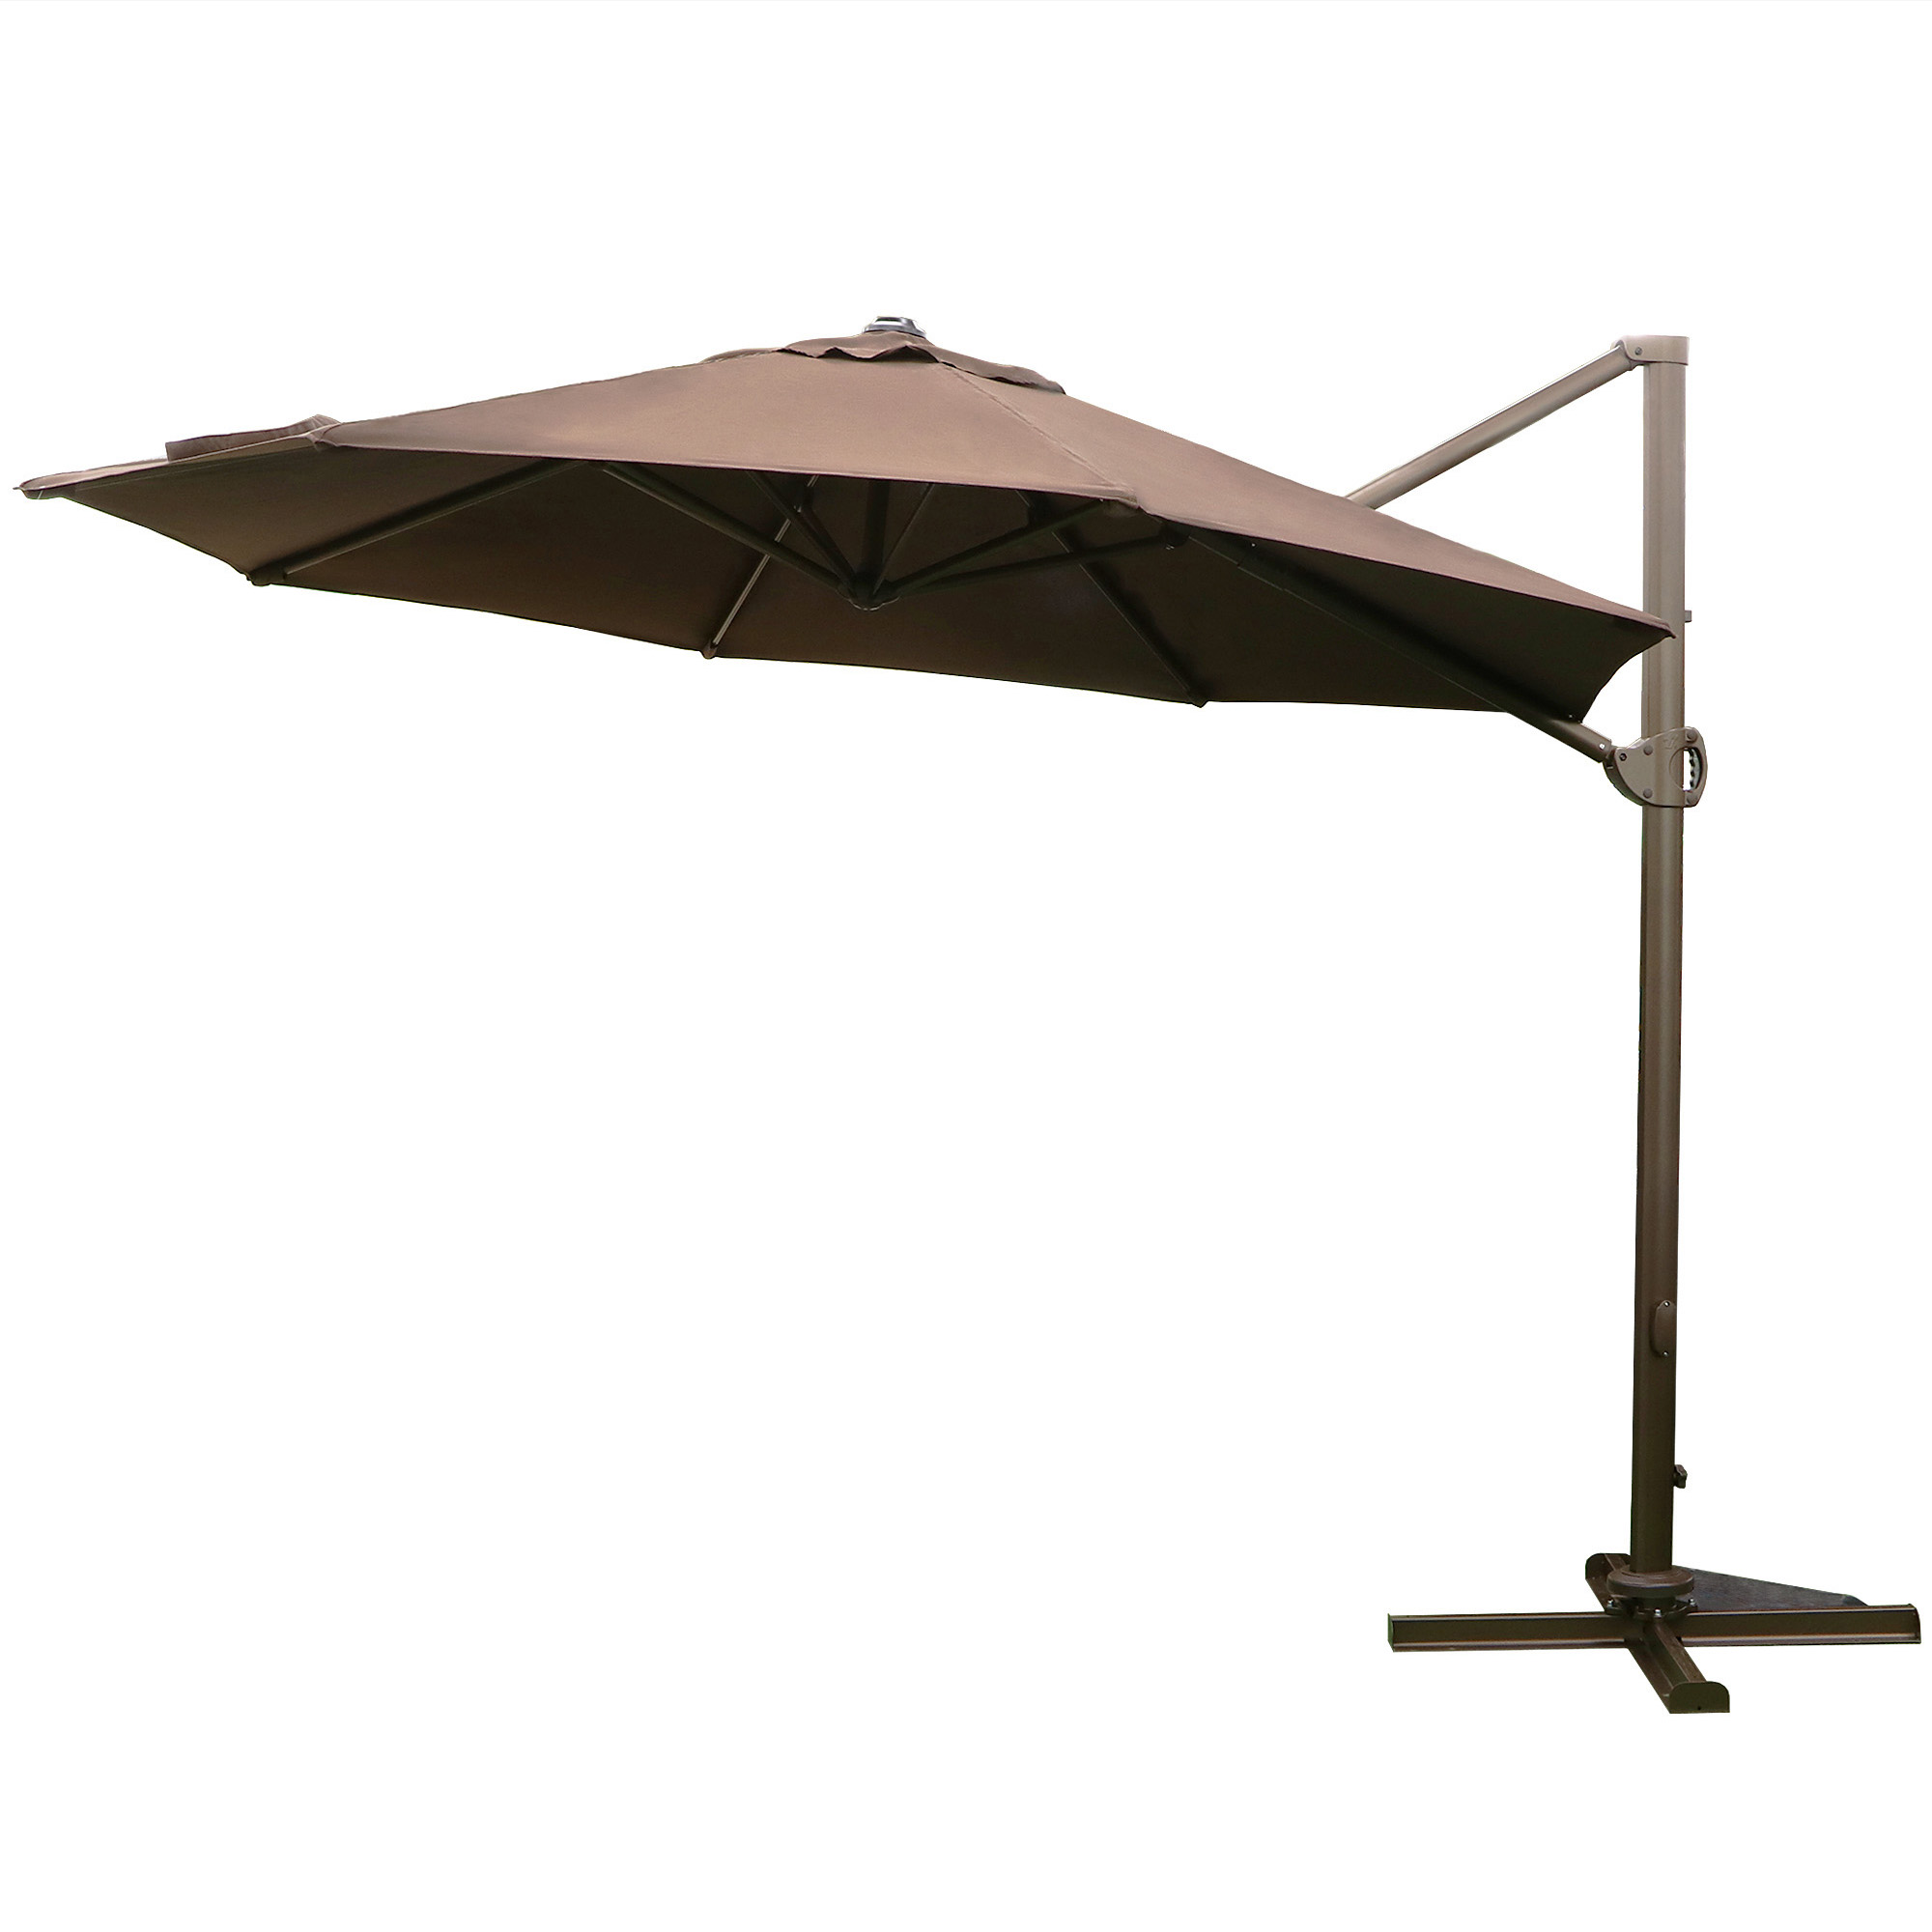 Зонт садовый Zhengte коричневый, 3х3 м